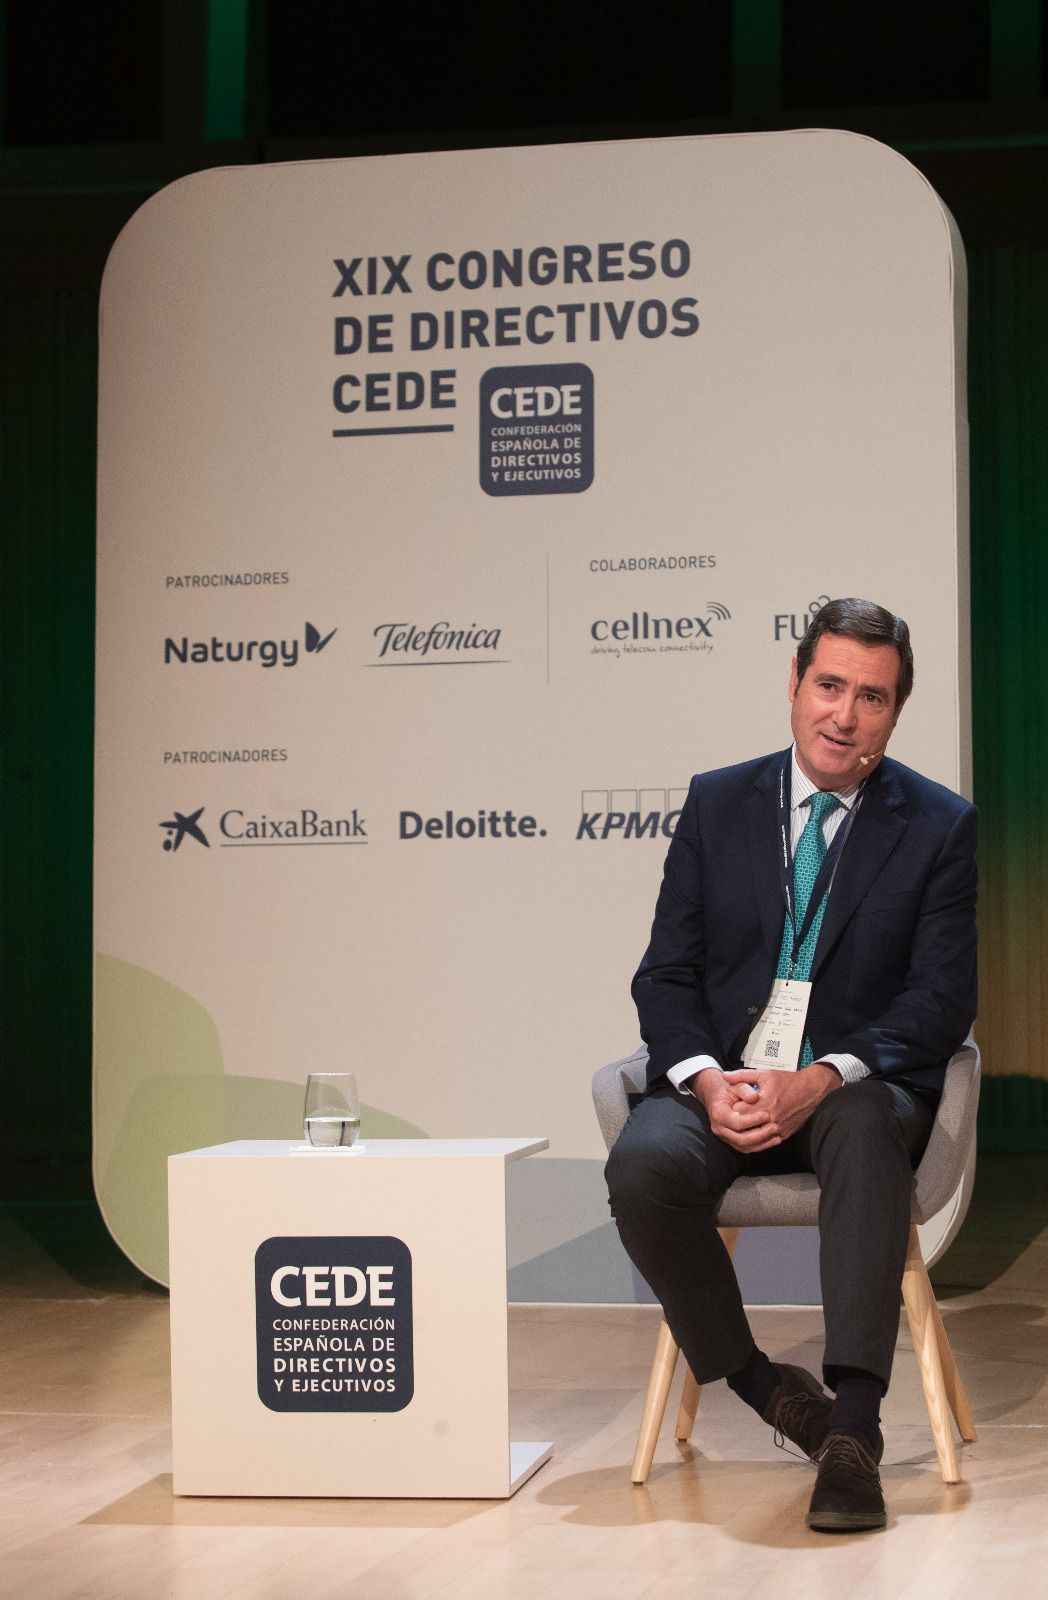 XIX Congreso de directivos CEDE en València